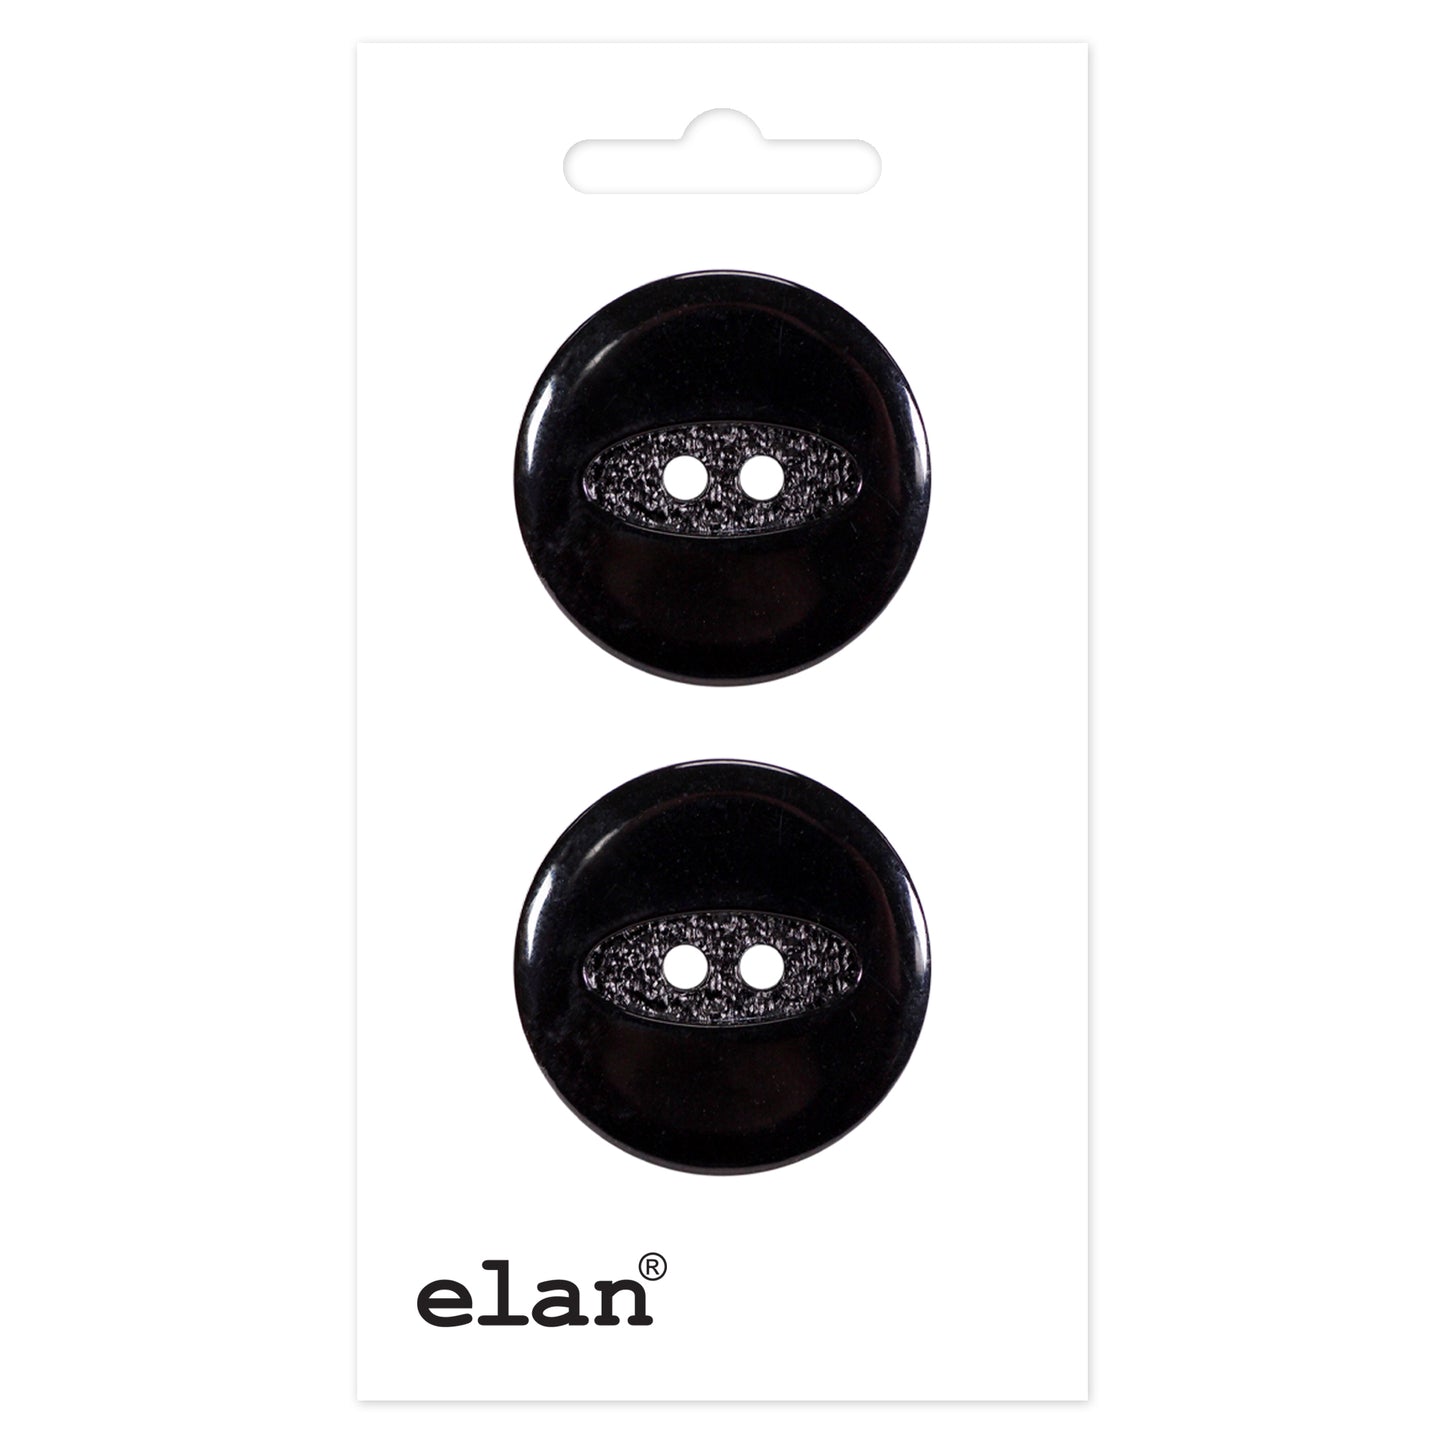 ELAN 2 Hole Button - 25mm (1″) - 2 count - 101819A